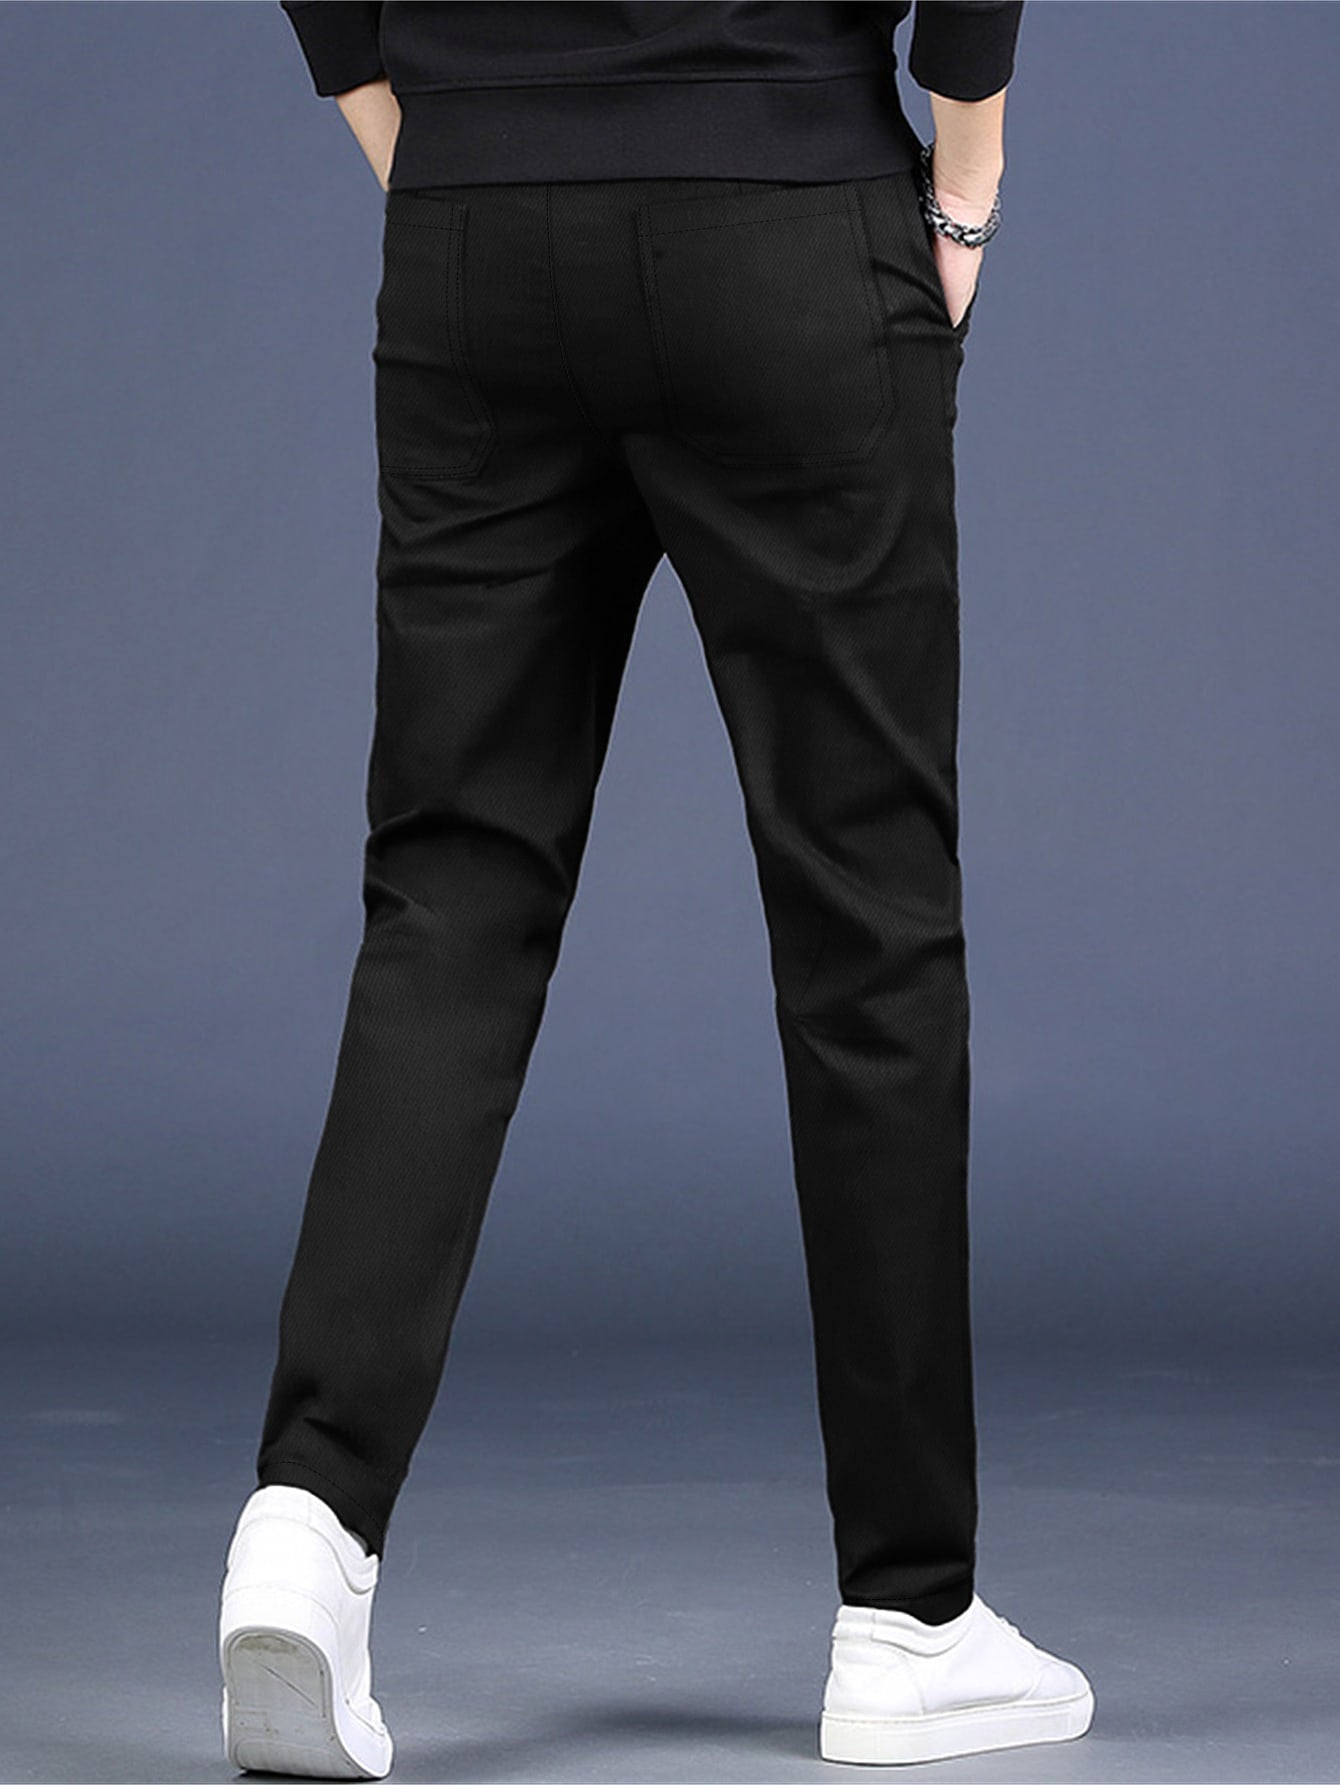 Manfinity Mode Men Solid Slant Pocket Tailored Pants